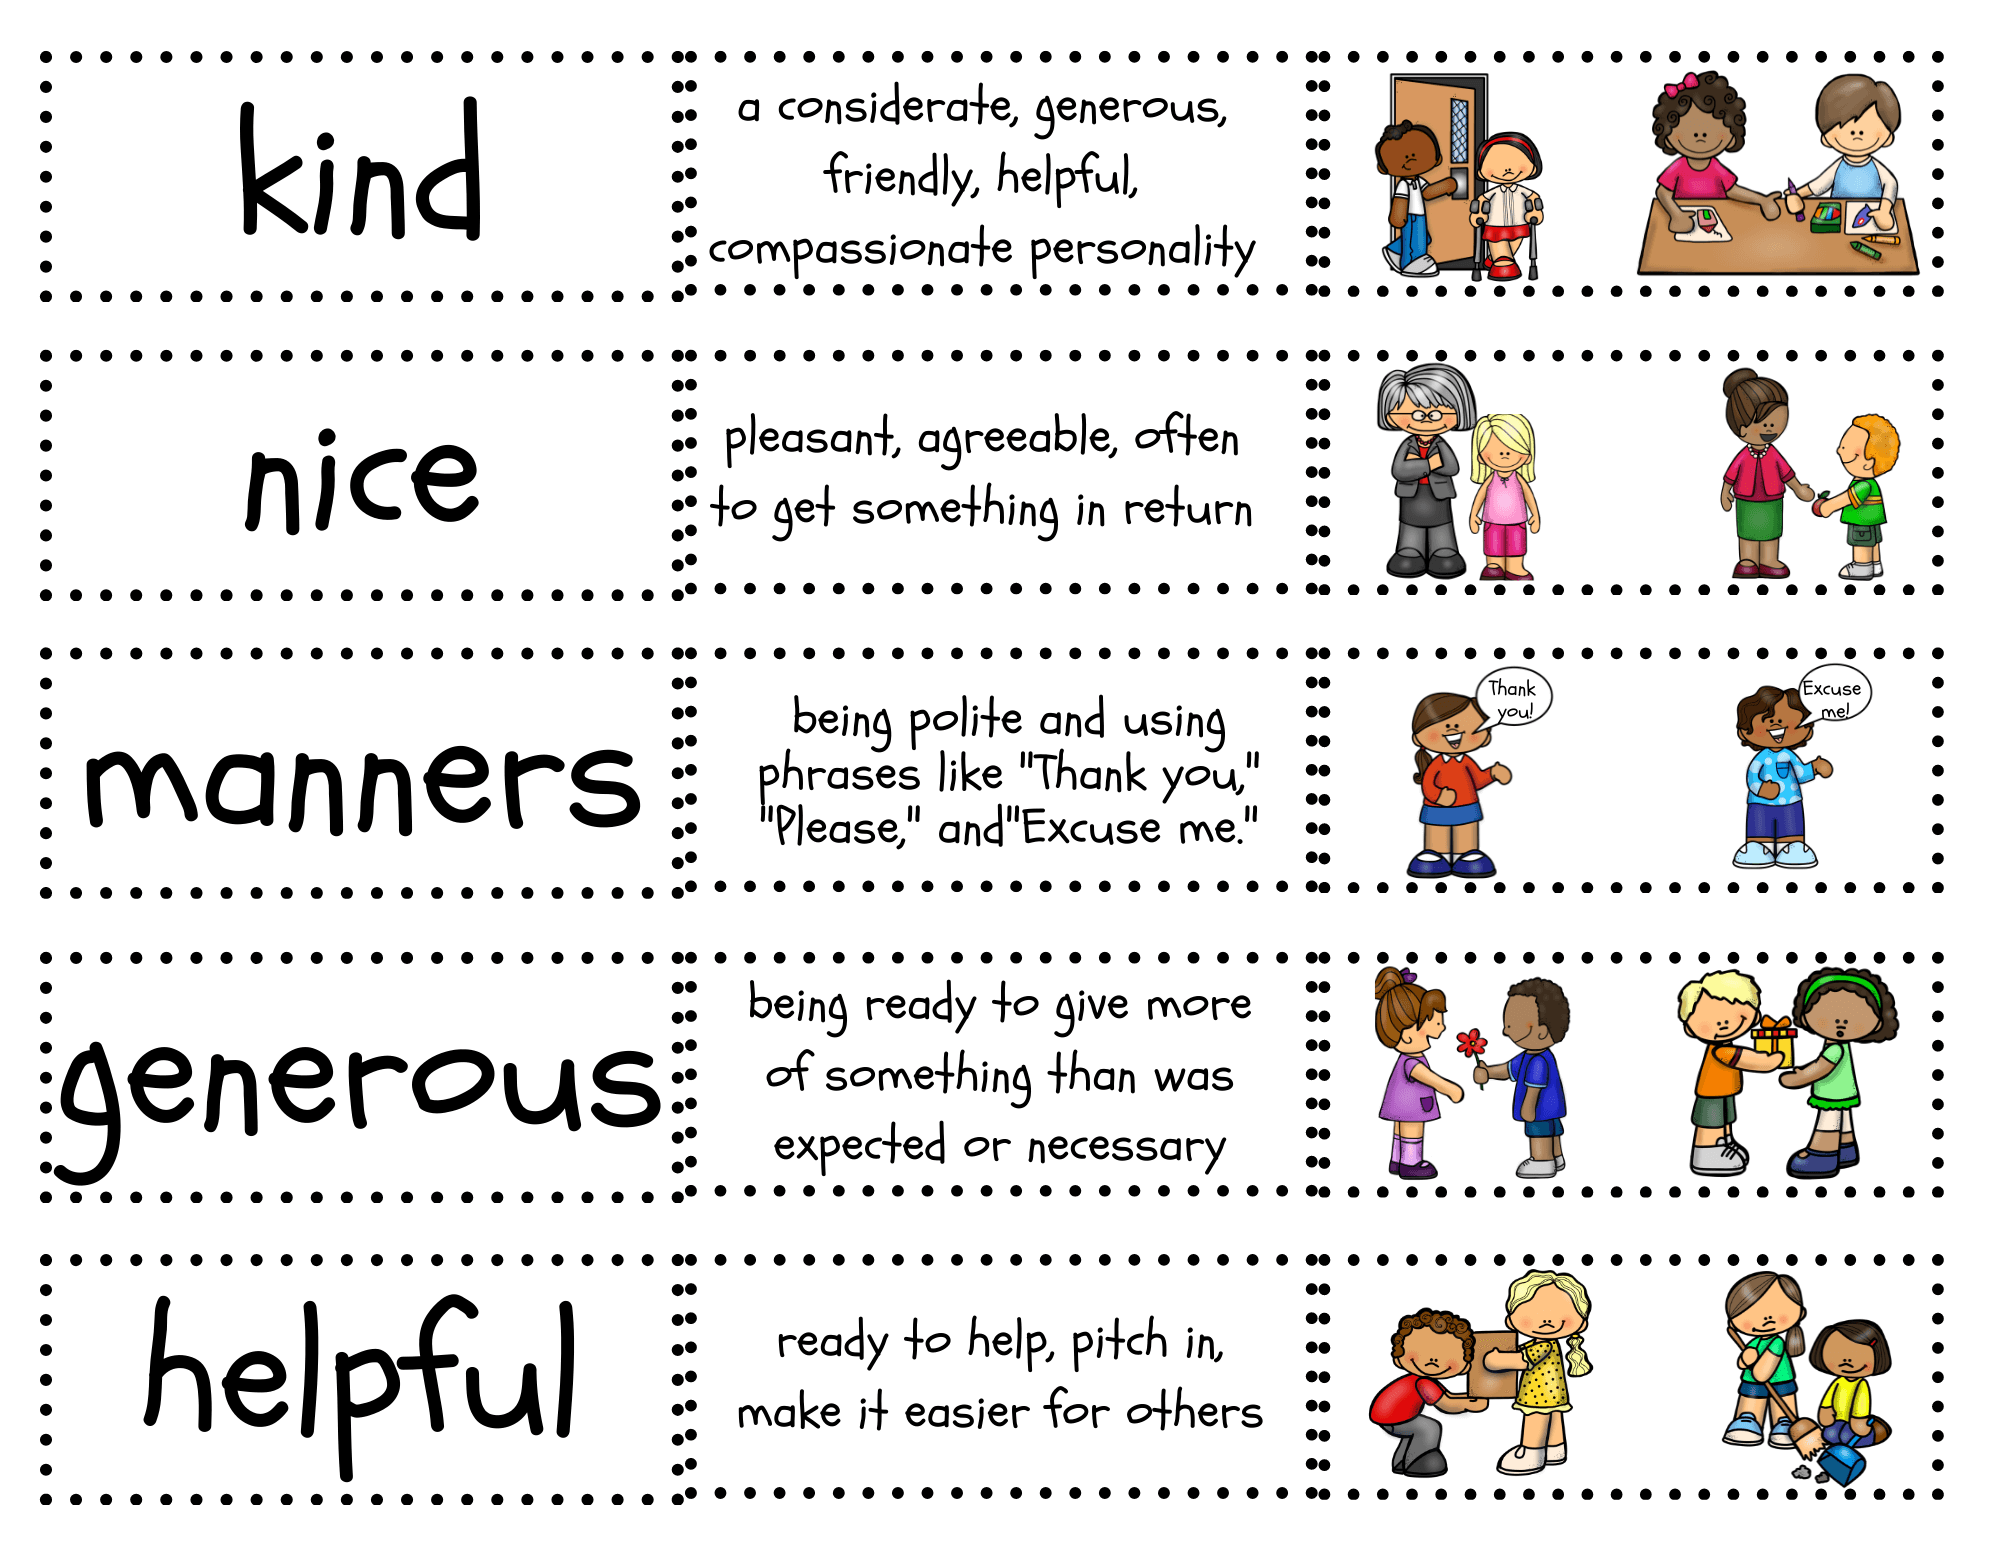 https://coffeeandcarpool.com/kindness-vocabulary-activity-for-sel-curriculum/